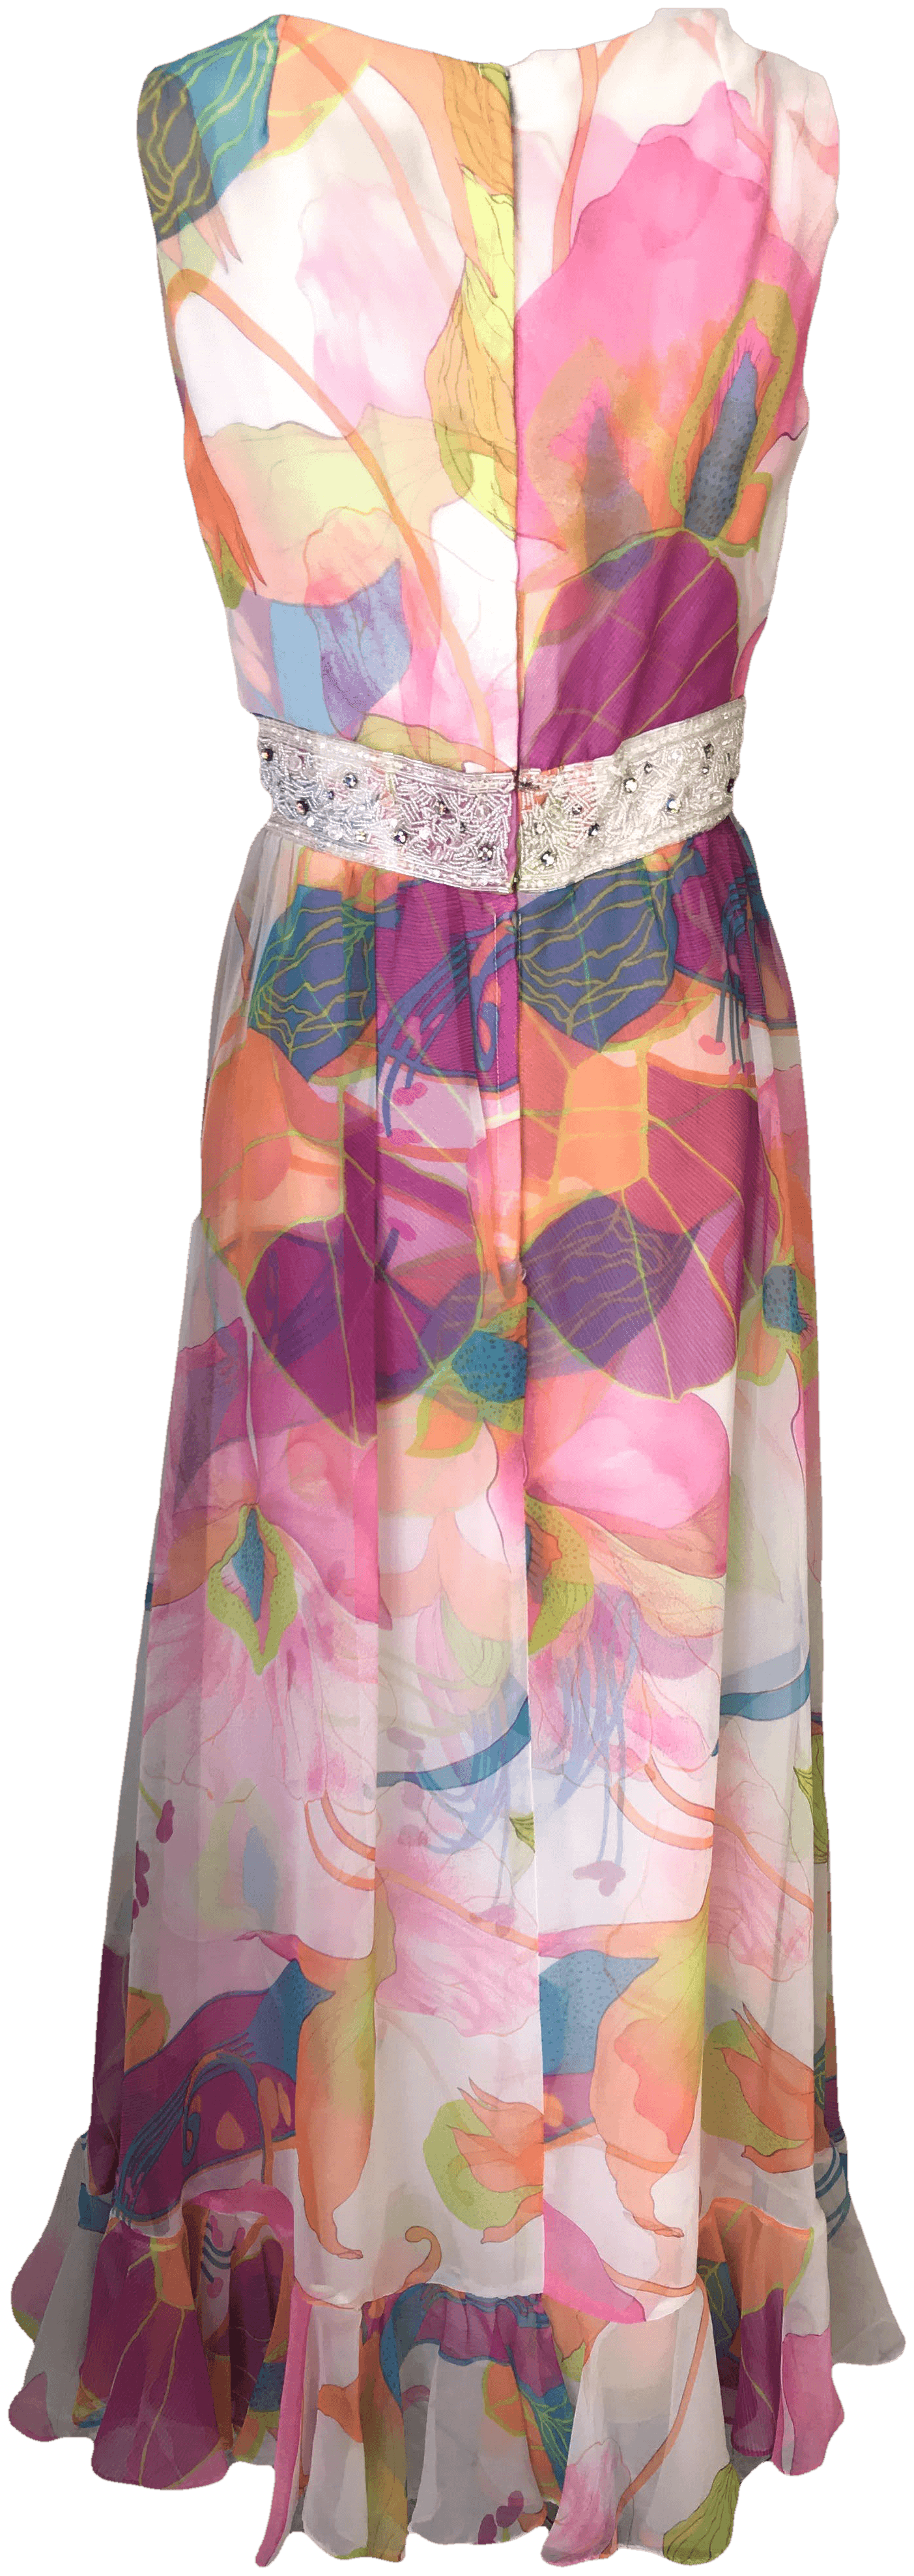 bright floral dress